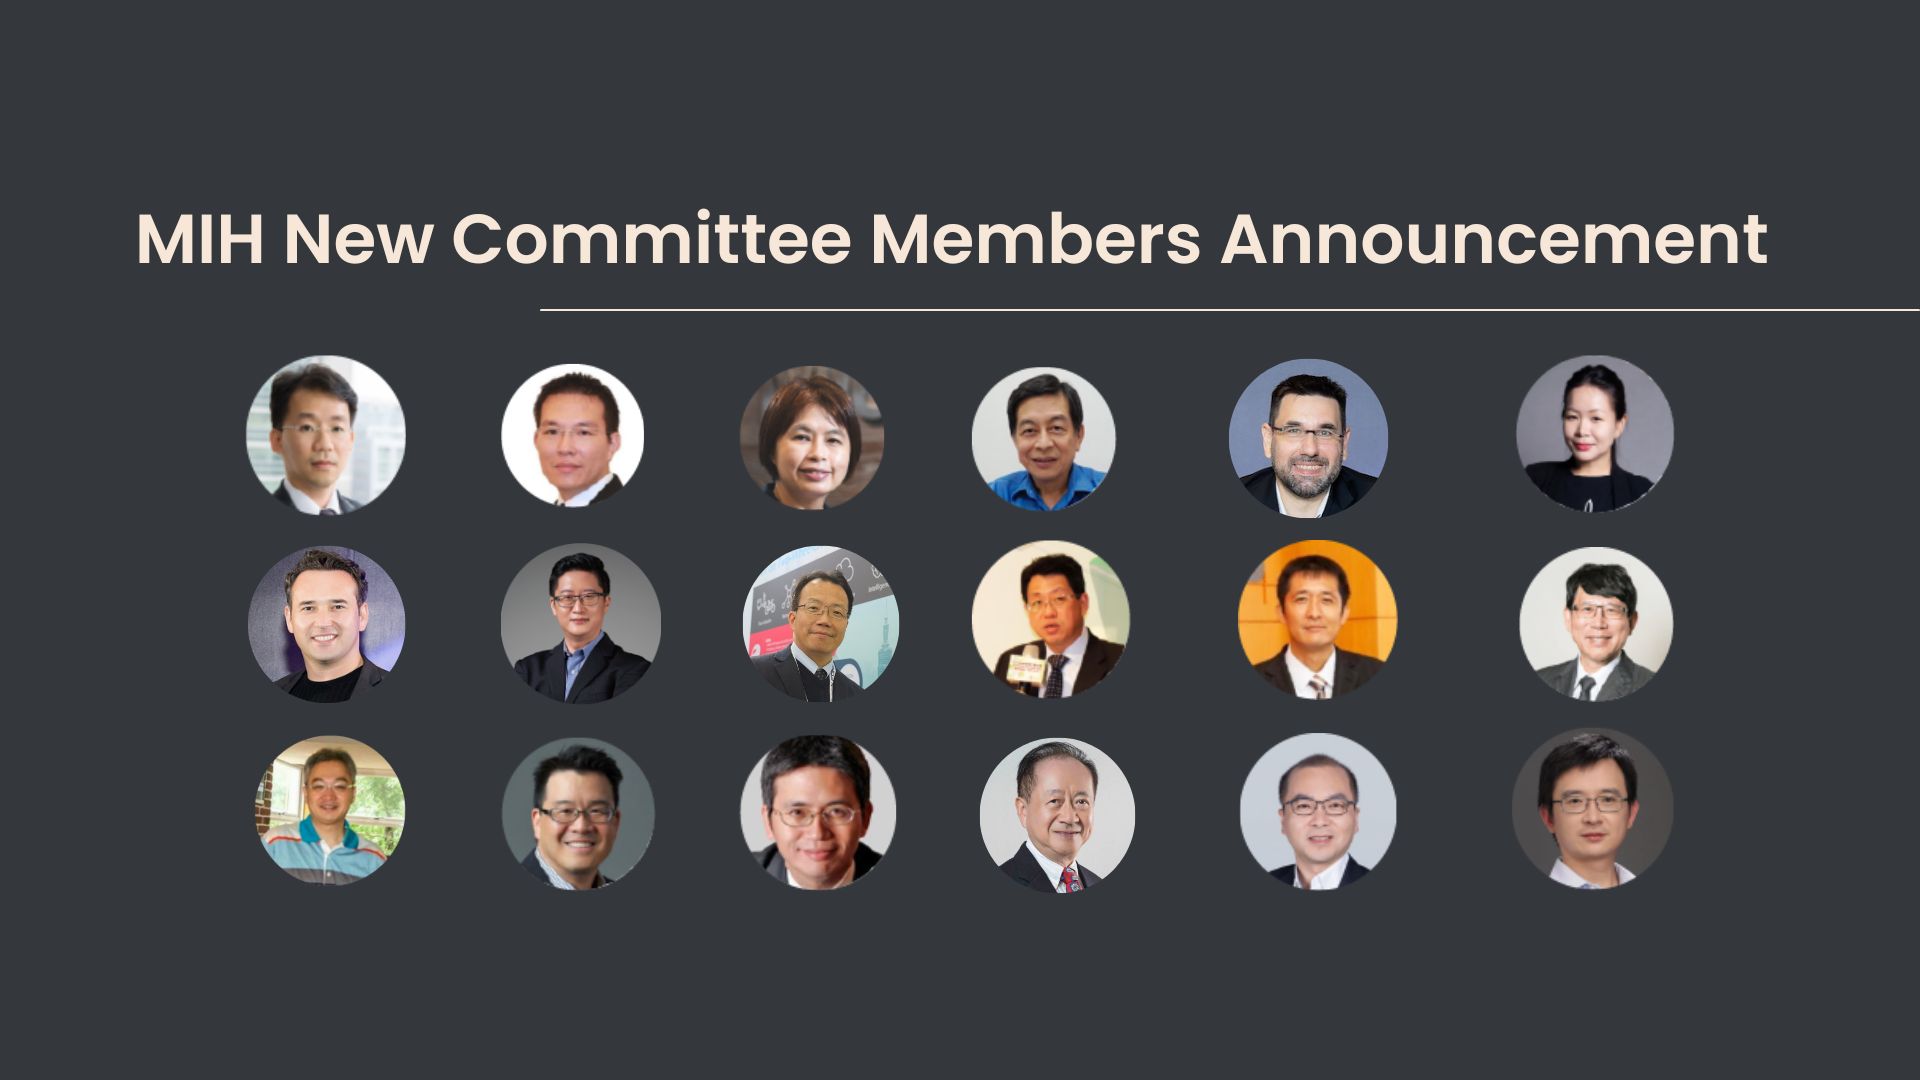 MIH New Committee Members Announcement